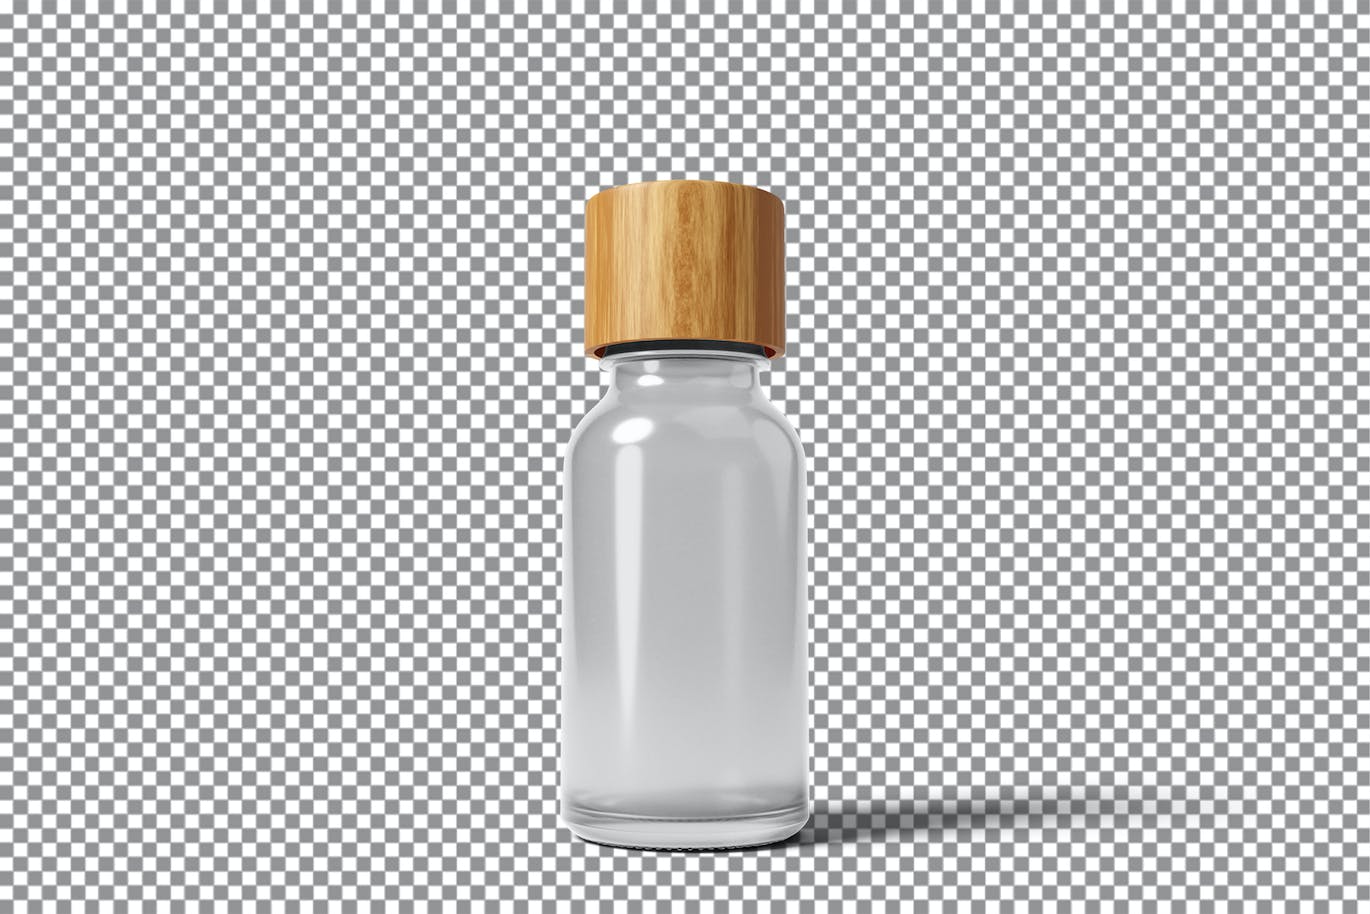 30ml精油玻璃瓶包装设计样机 30ml Essential Oil Glass Bottle Mockup 样机素材 第3张